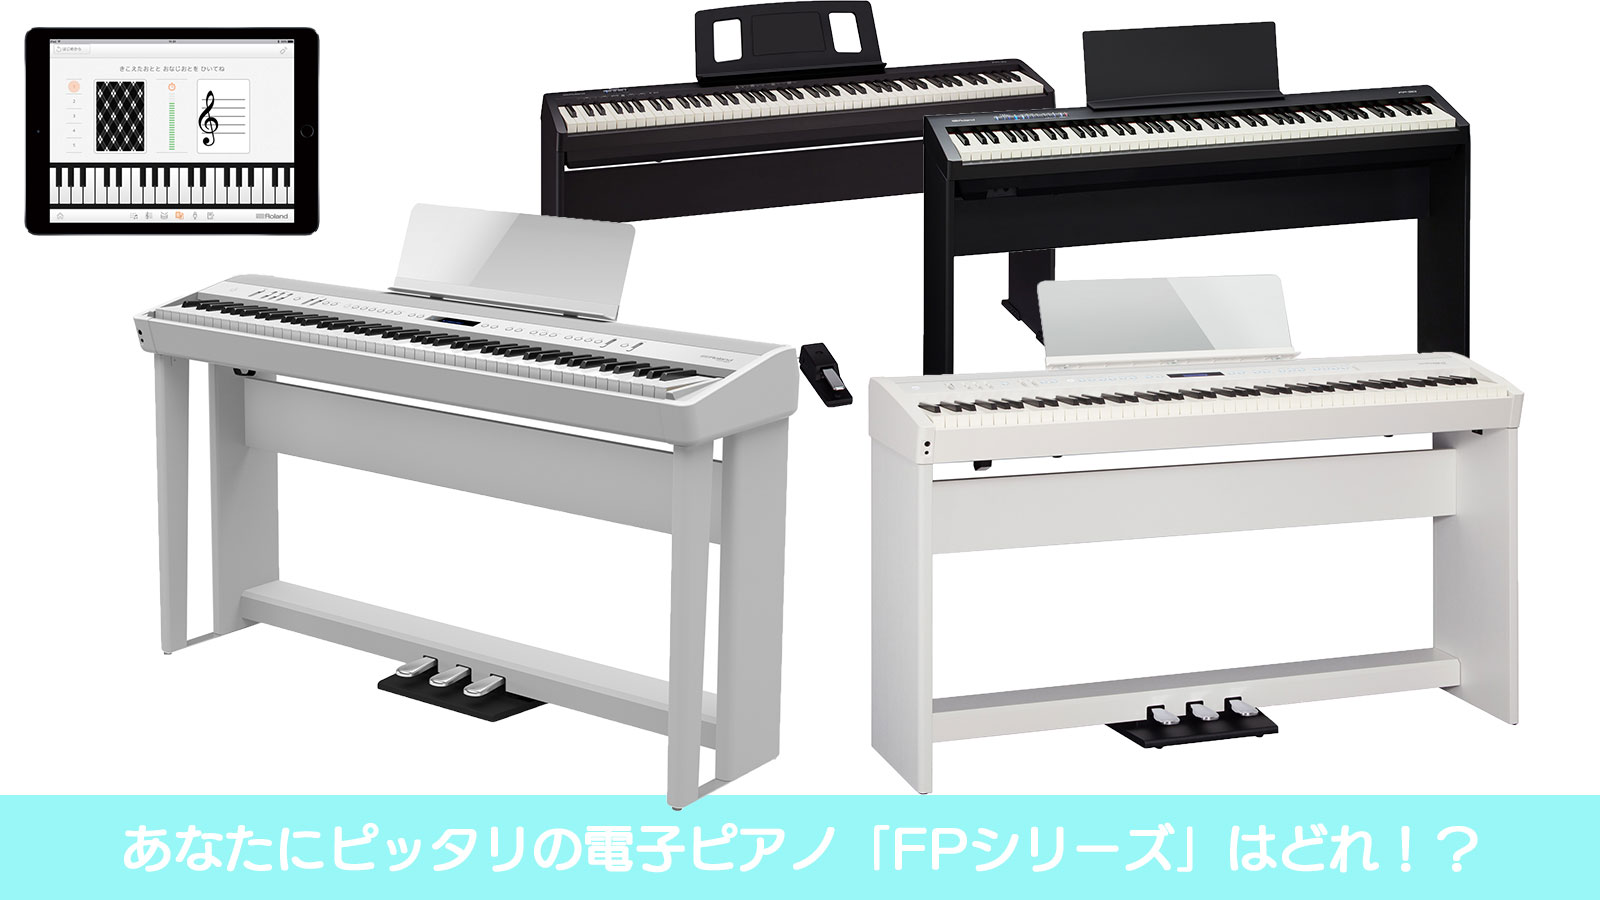 Roland - Blog - Support - 【SUPPORT】あなたにピッタリの電子ピアノ